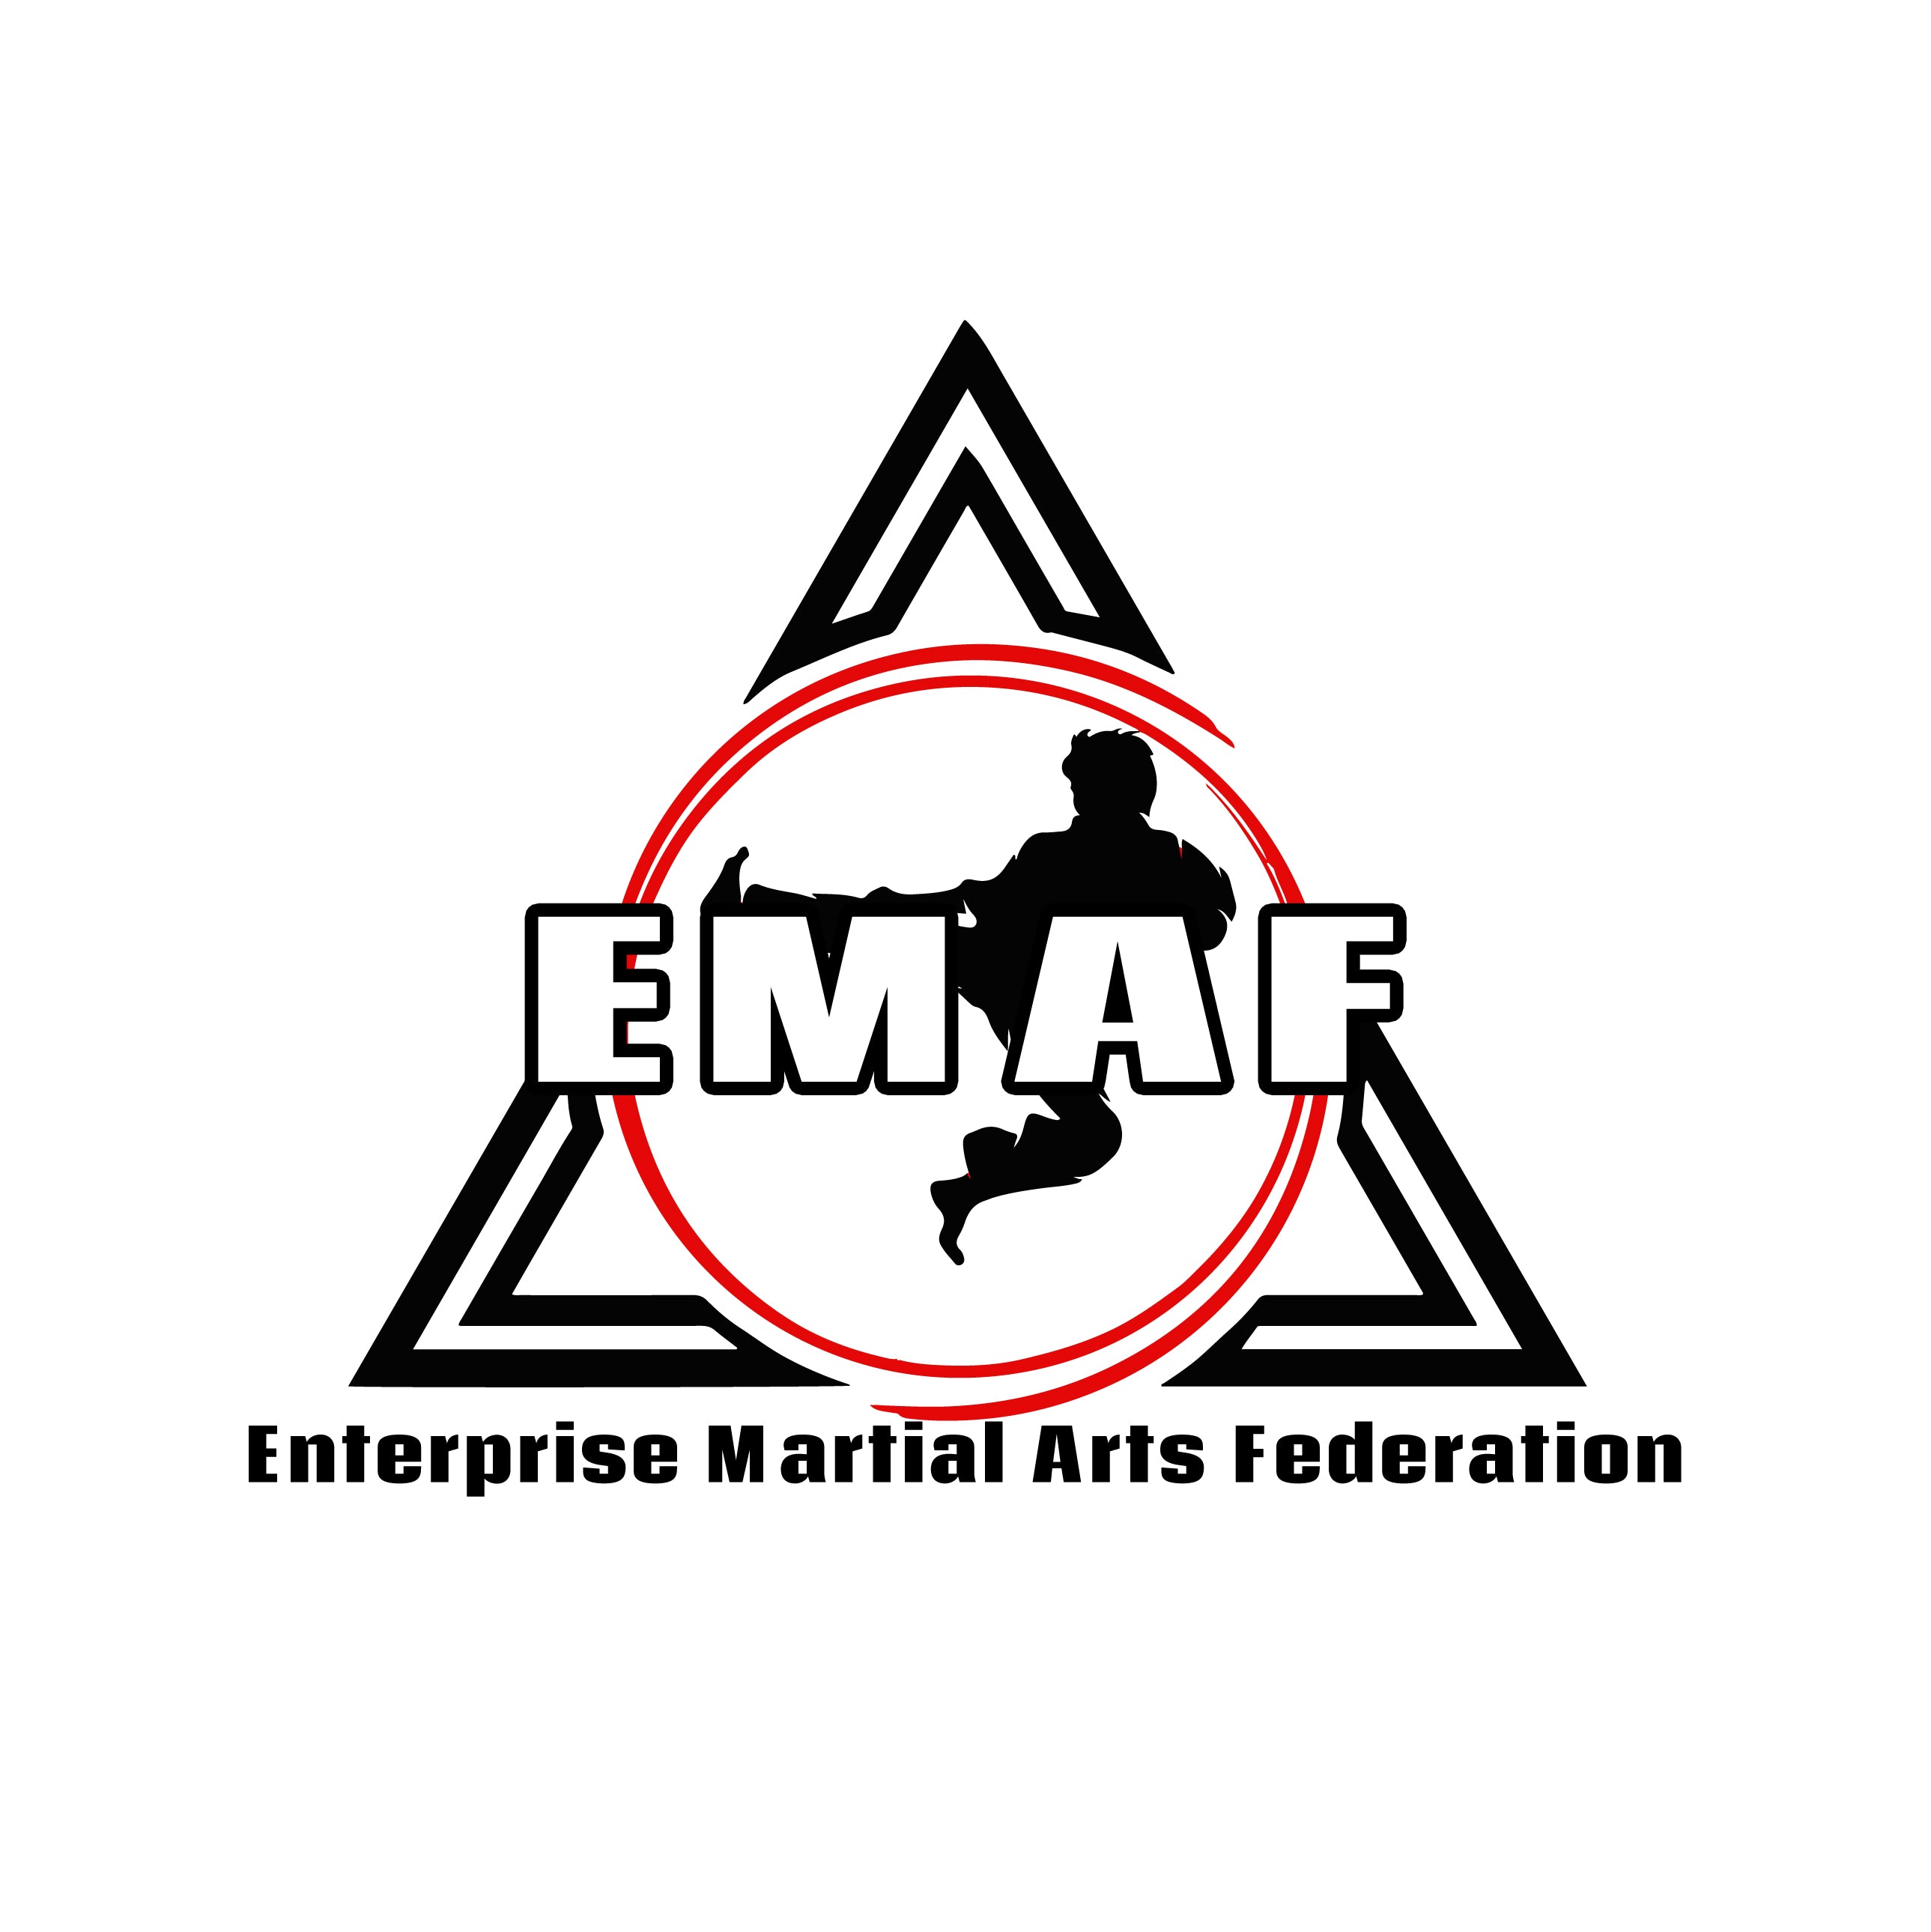 Enterprise Martial Arts Federation